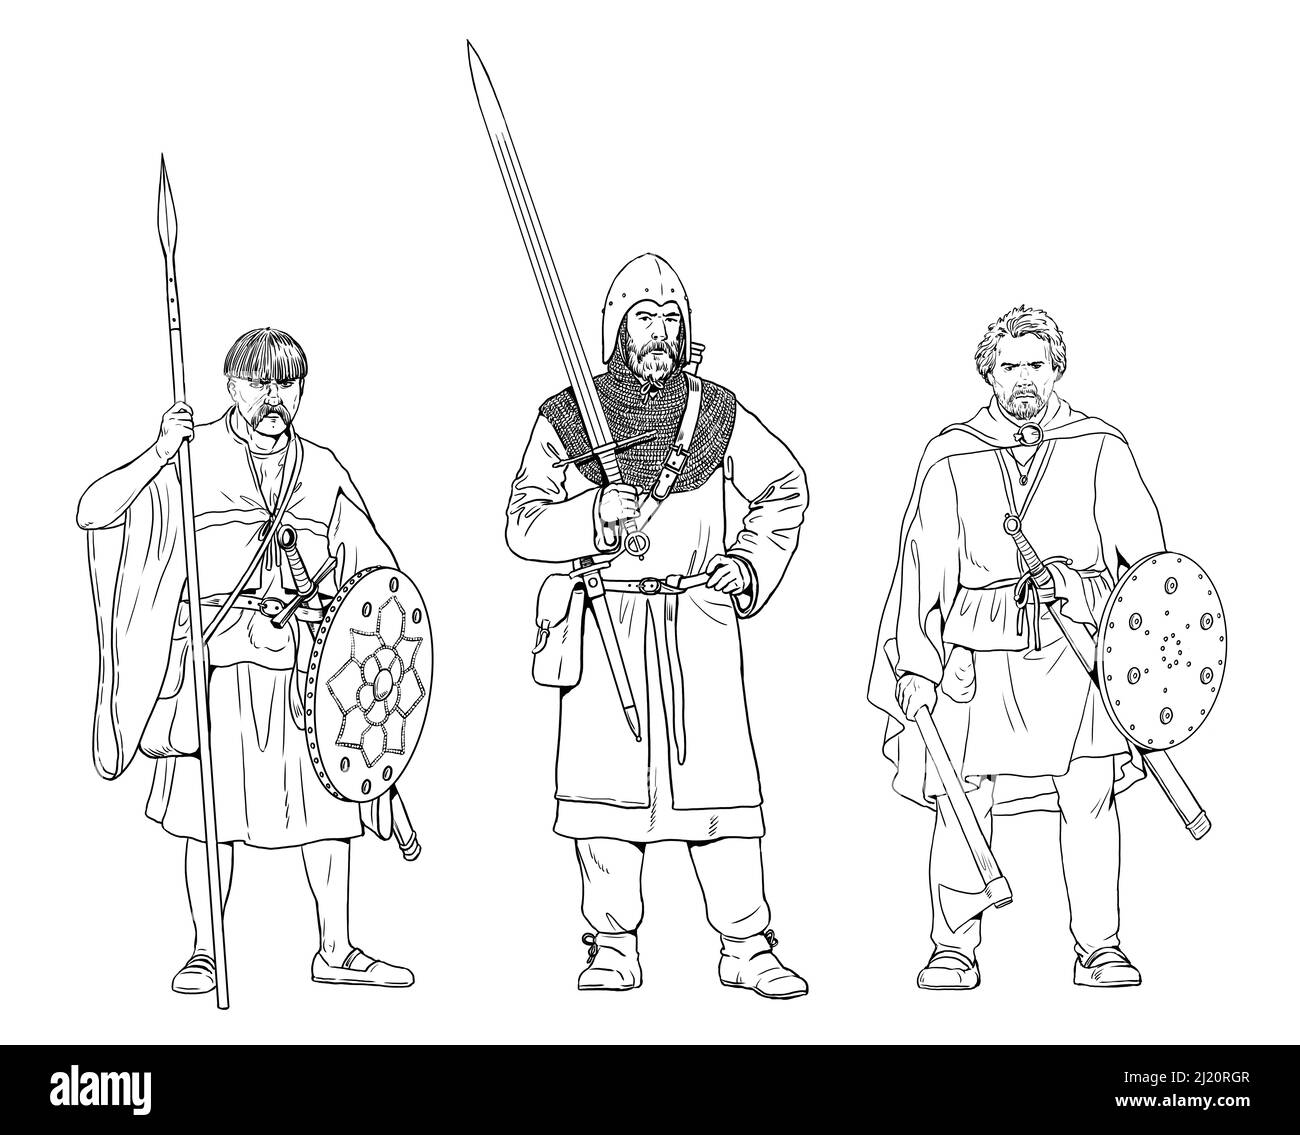 Irish warrior gallowglass. Elite mercenary warriors. Medieval knight illustration. Stock Photo